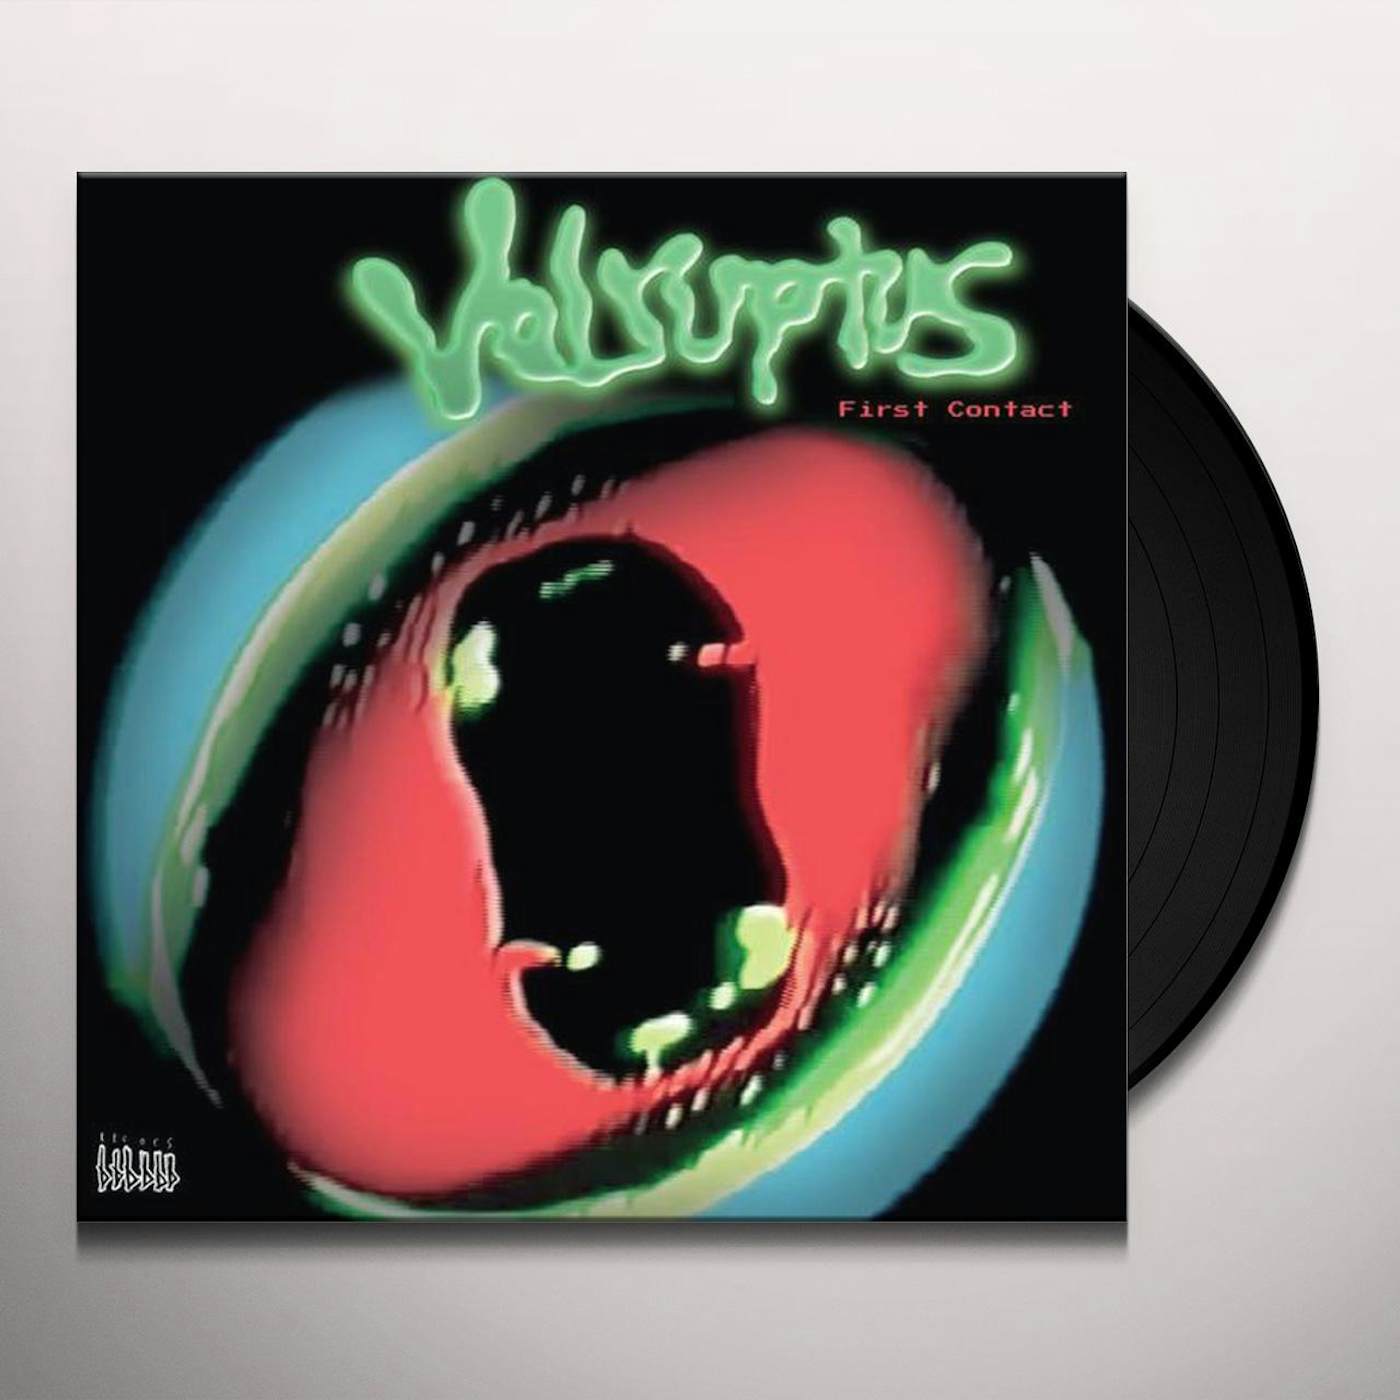 Volruptus First Contact Vinyl Record